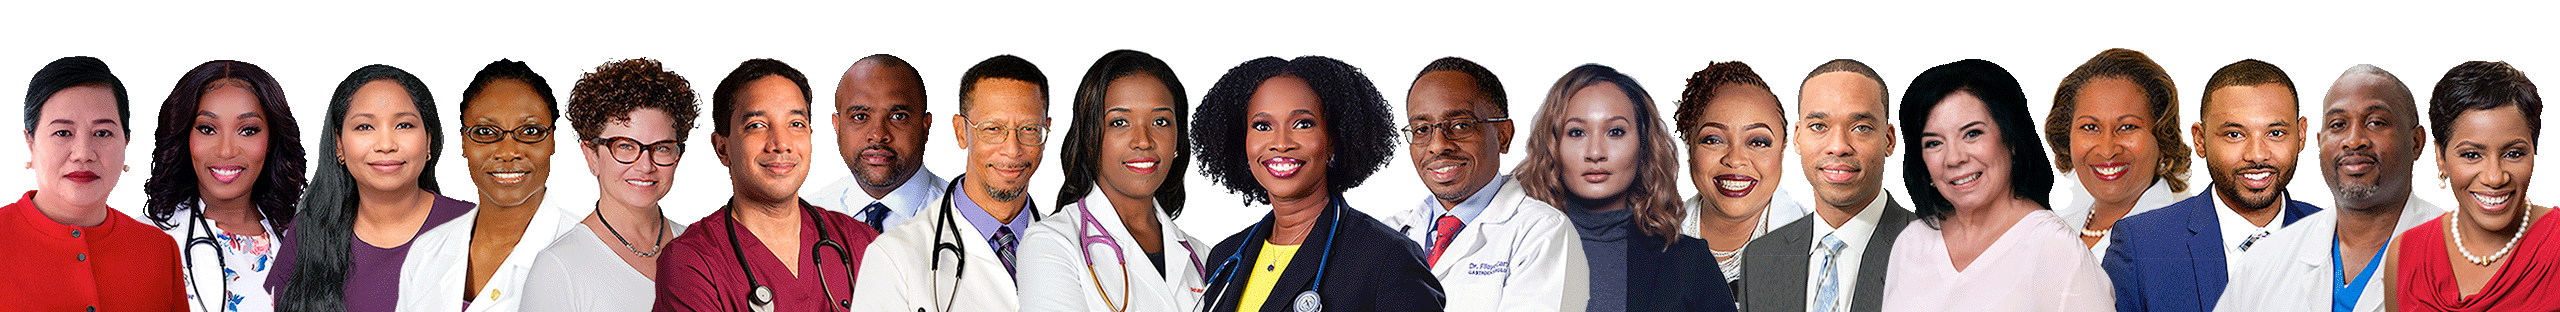 Family Medicine Center doctors; FMC medical team